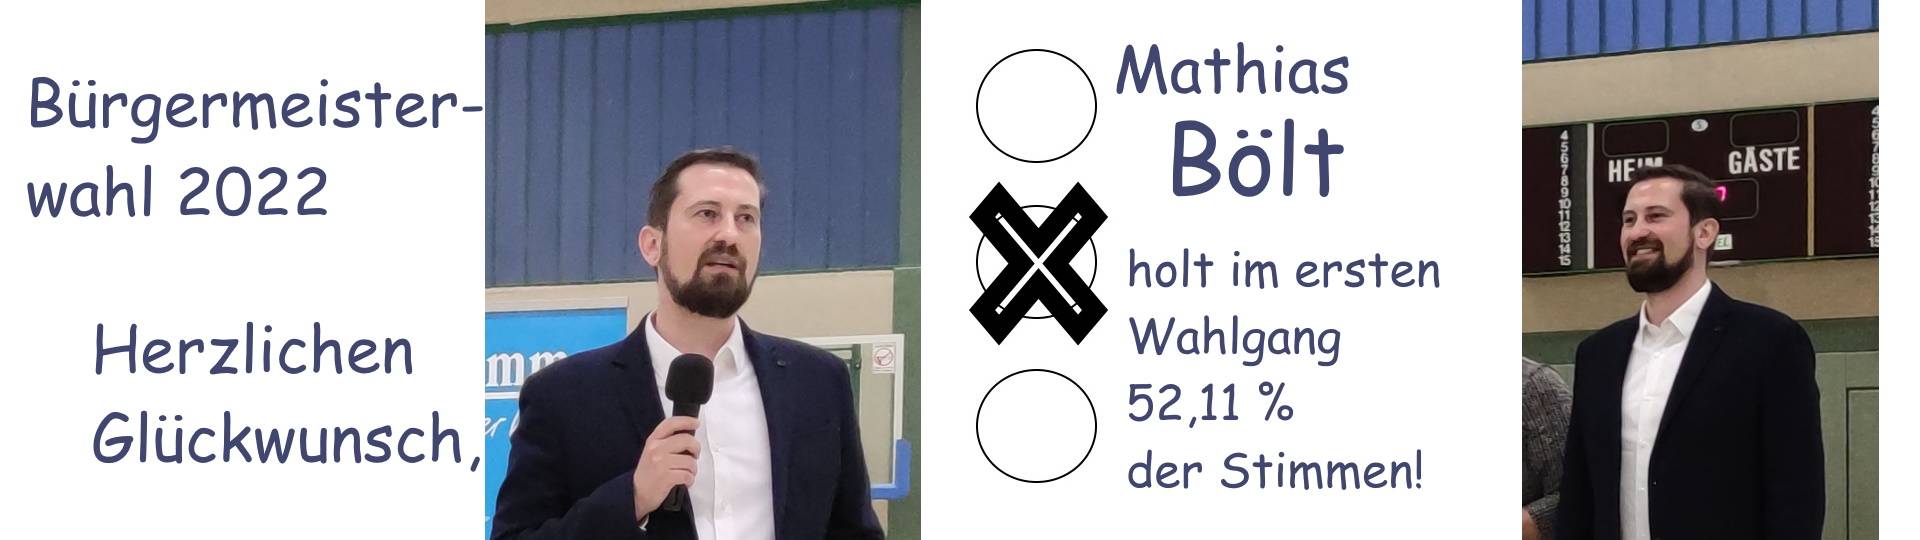 bürgermeisterwahl 2022 mathias bölt gewinnt die wahl ©Hansestadt Havelberg